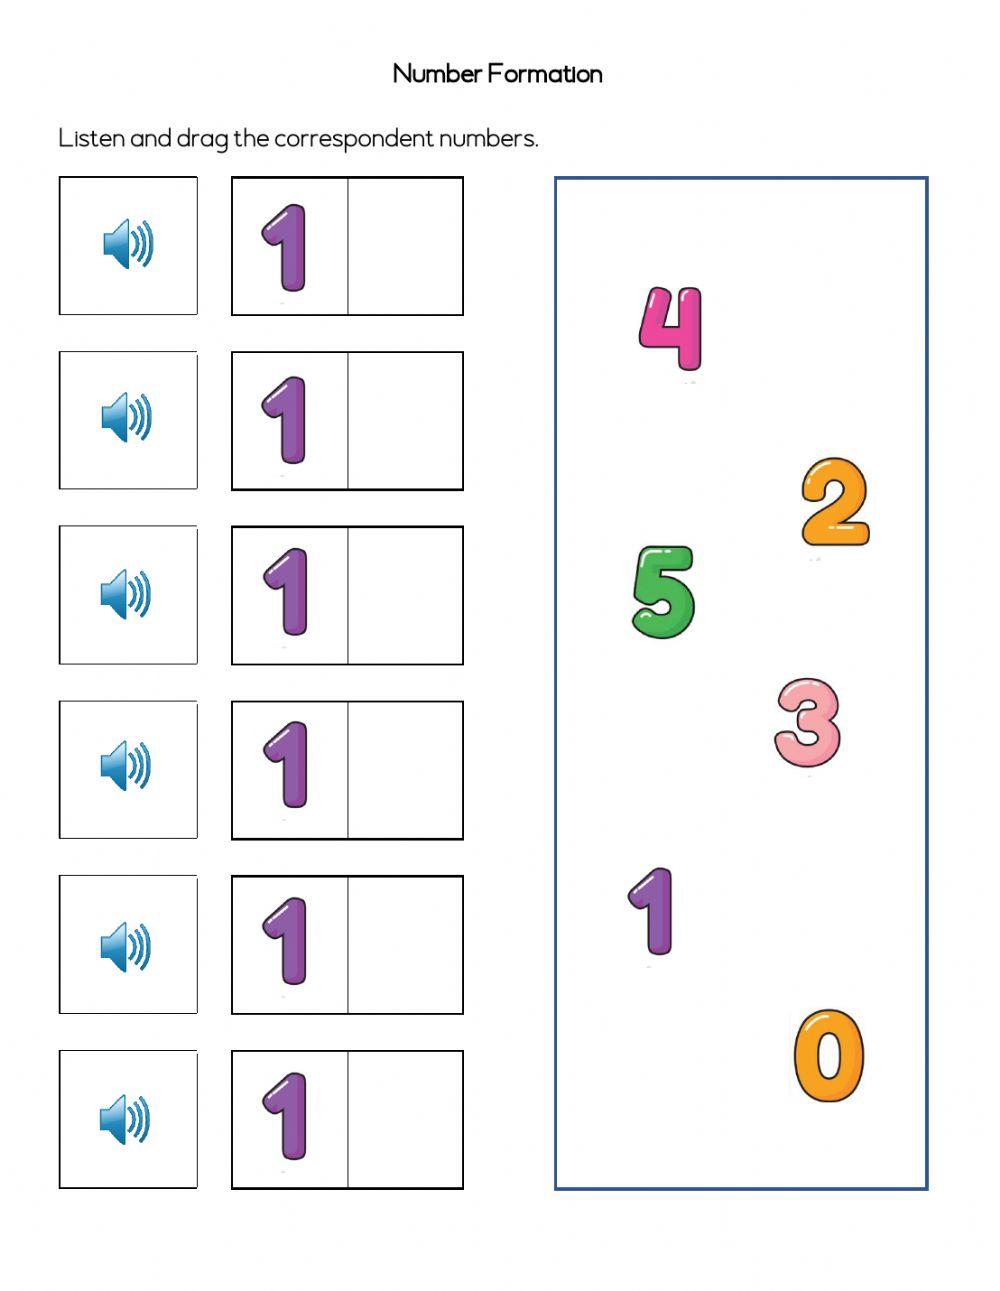 Number formation